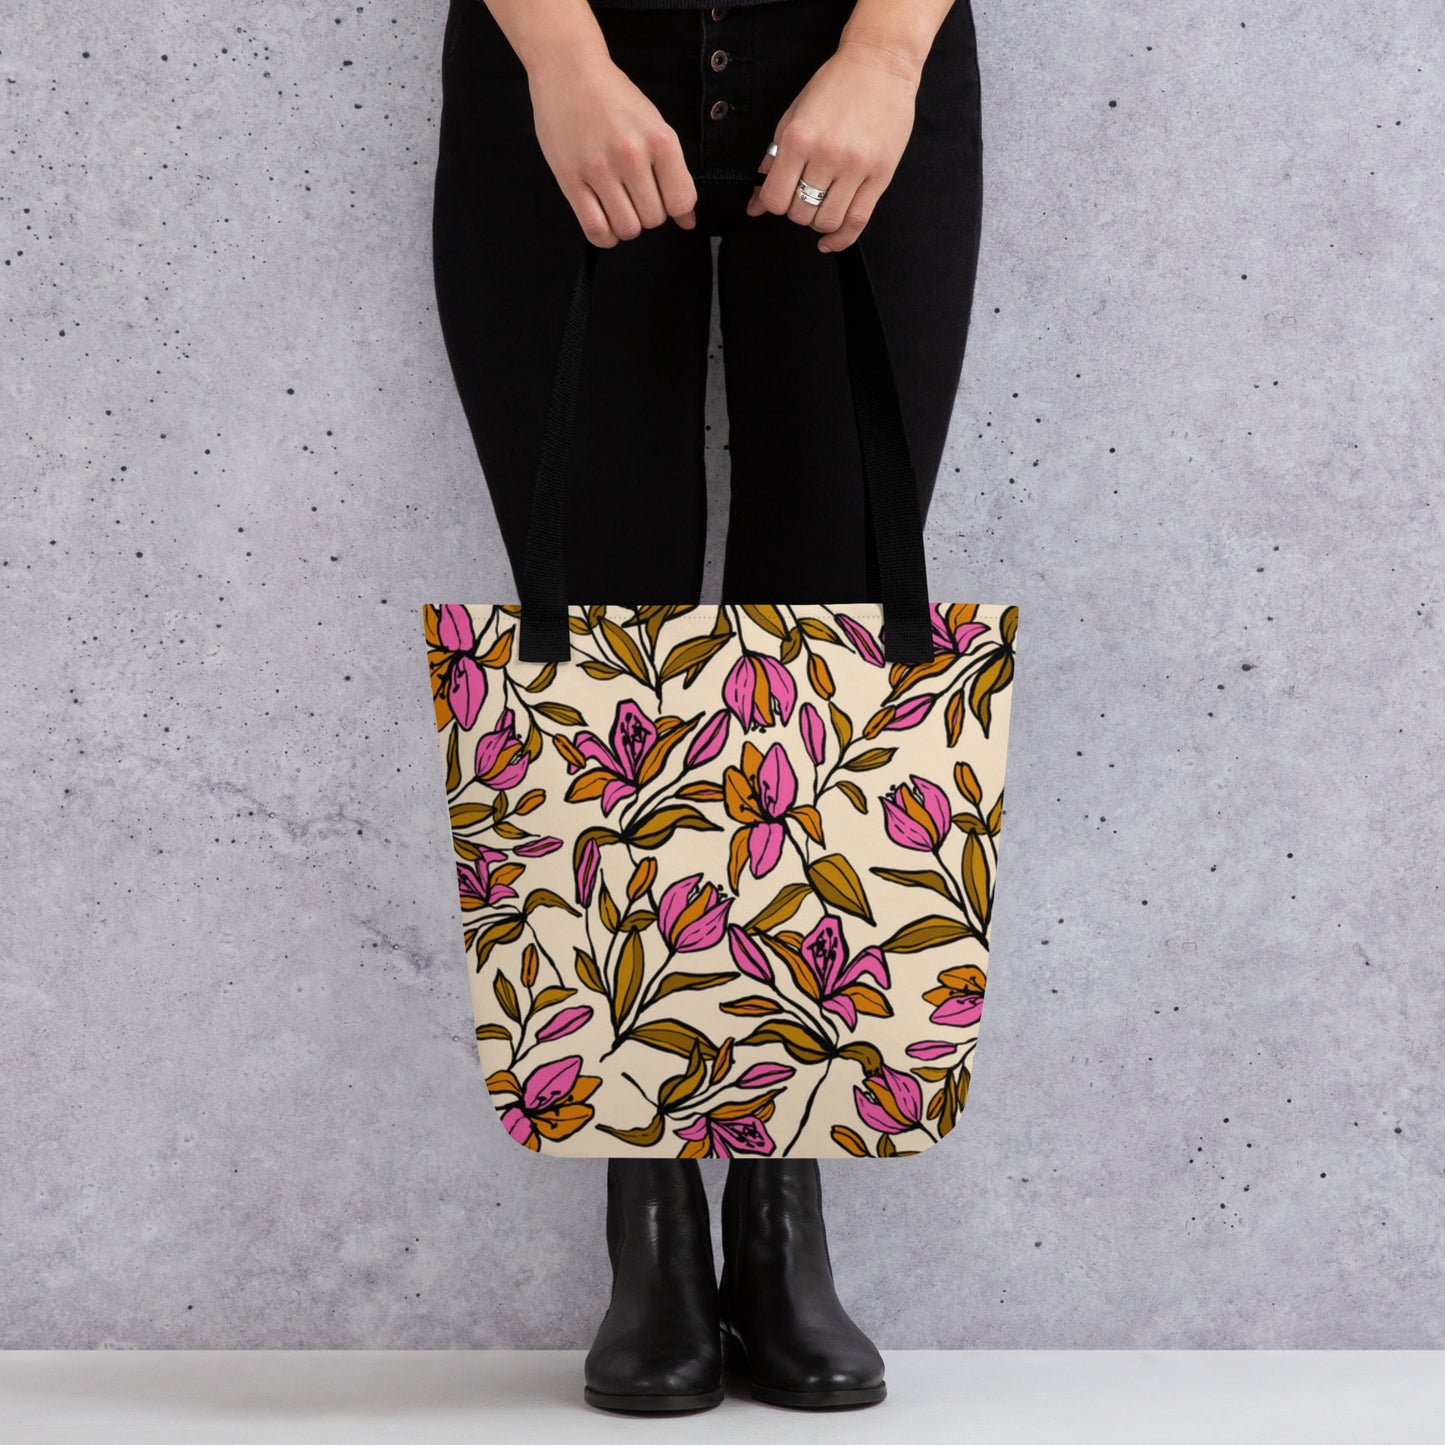 Premium Polyester Tote Bag - Blooming Spring Flowers Print